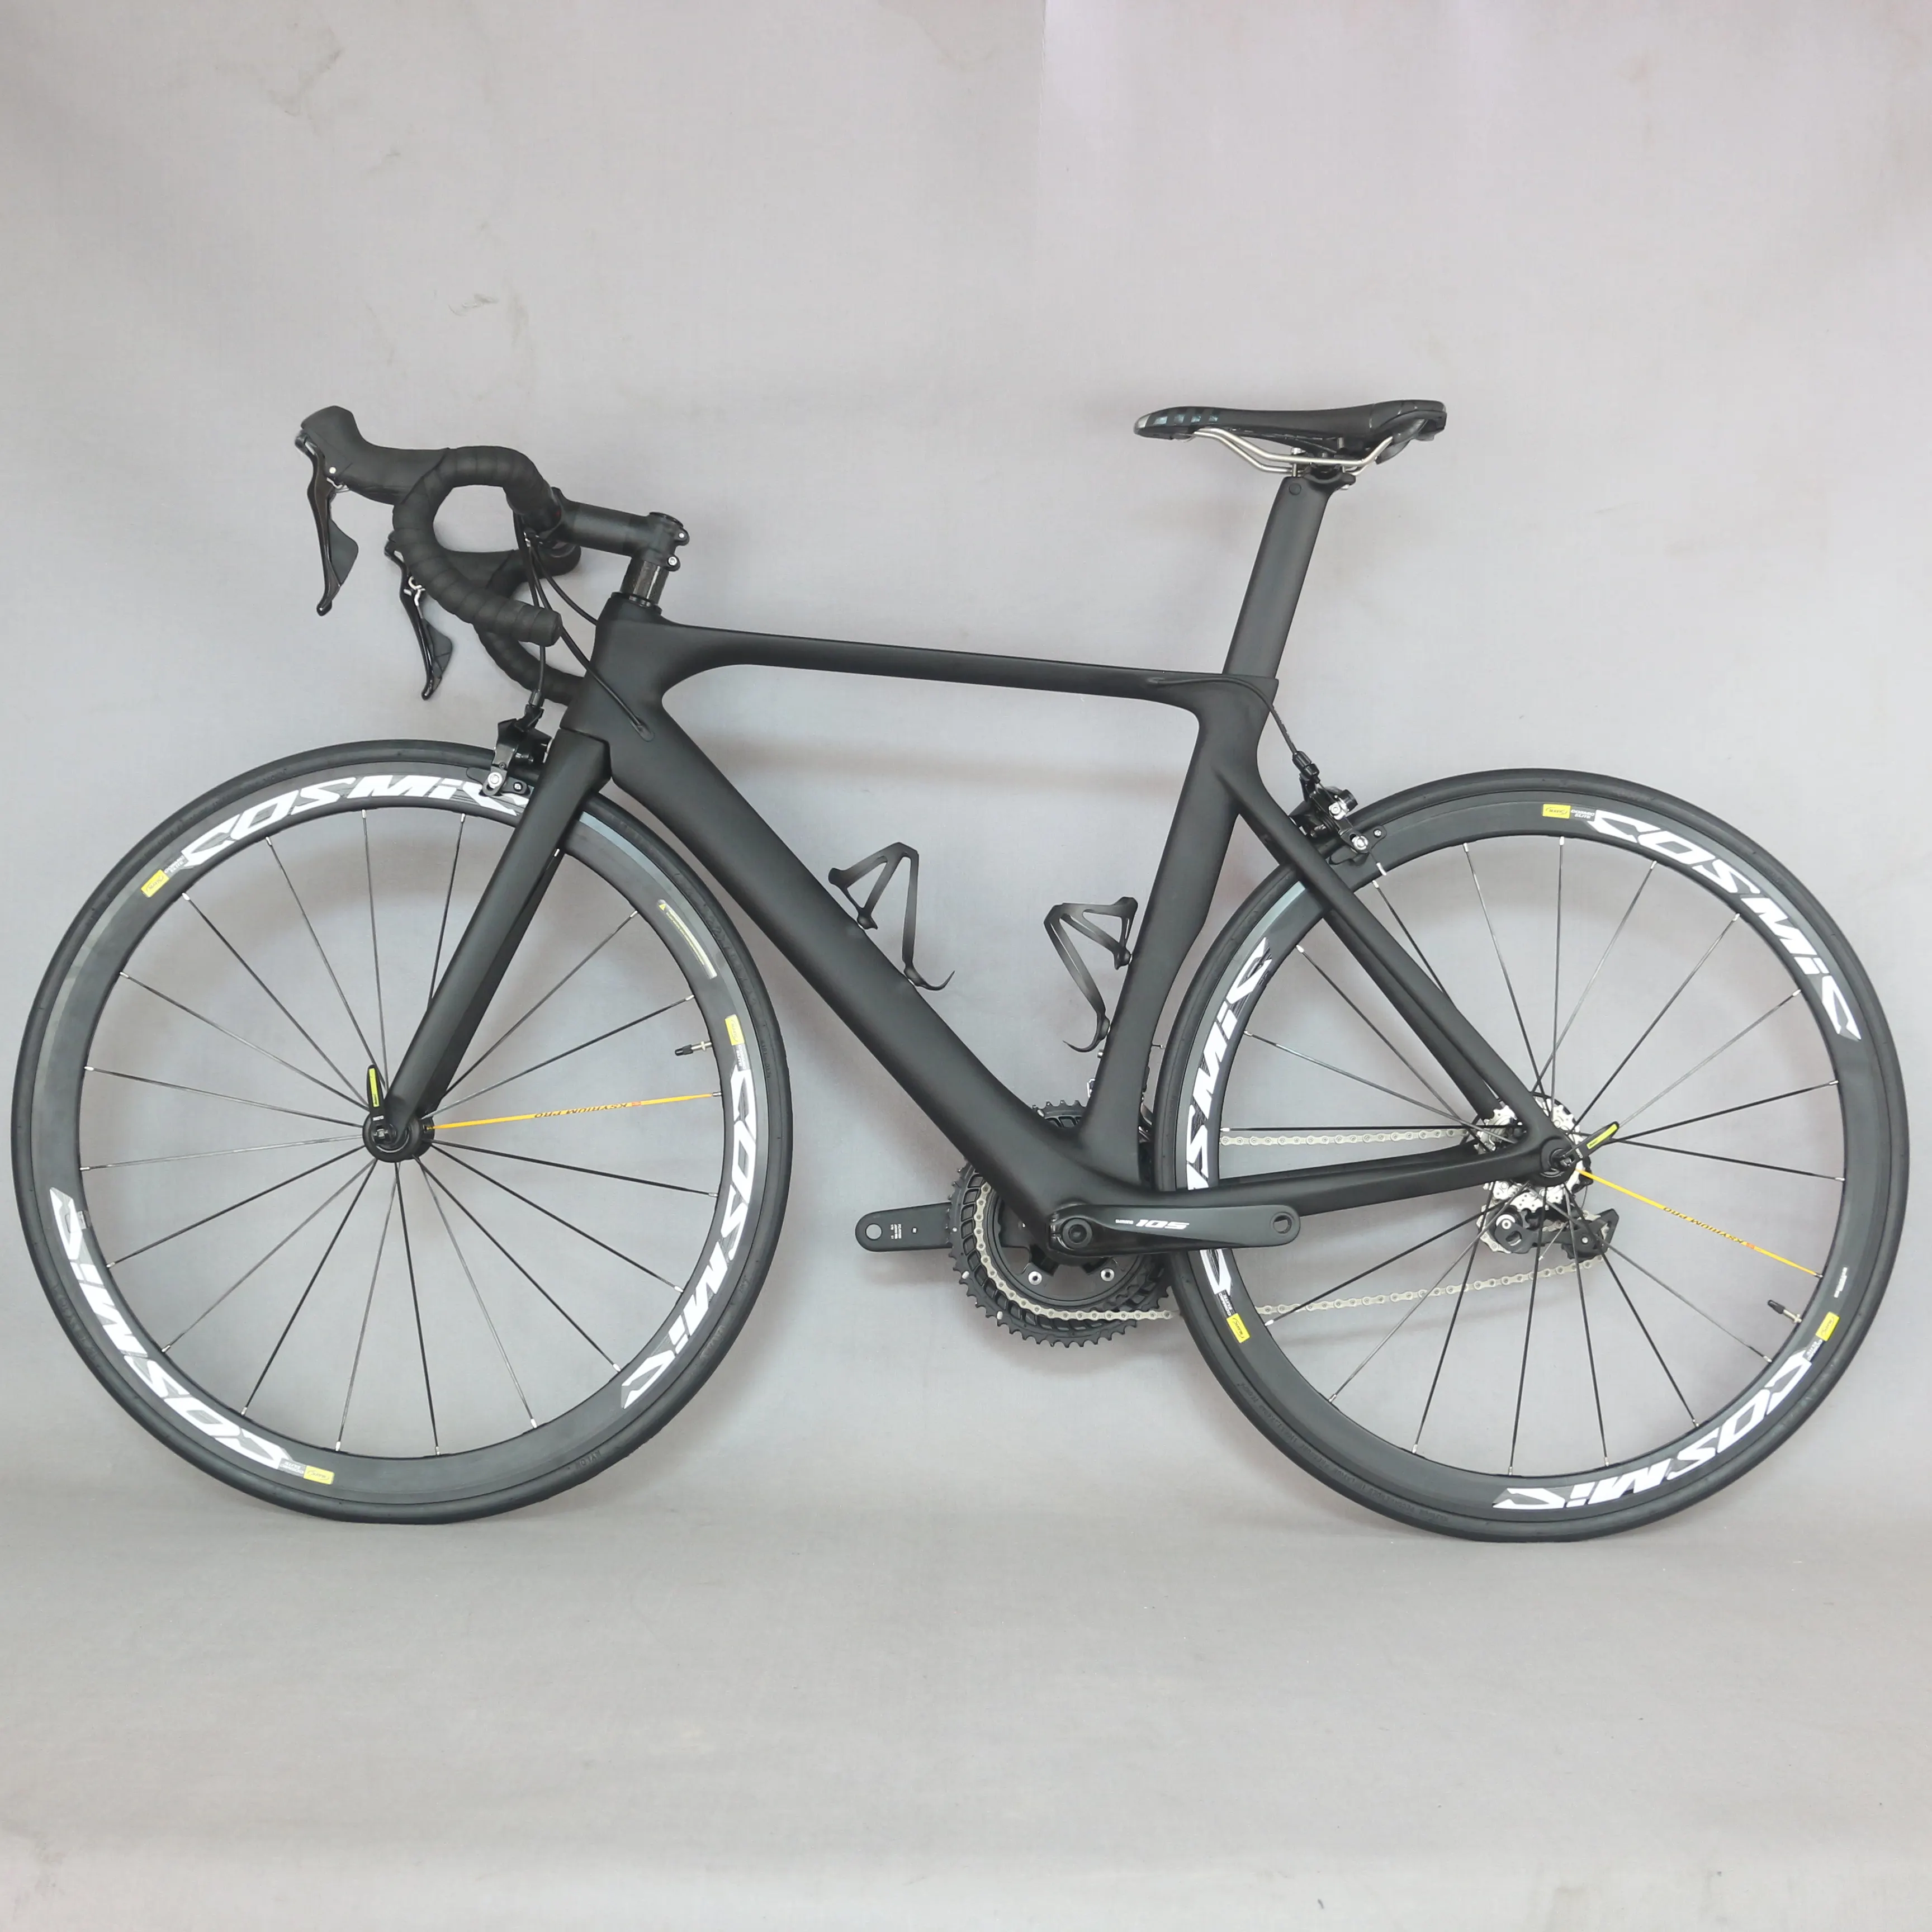 SHIMAN-bicicleta de carretera completa, de carbono, R7000, 700c